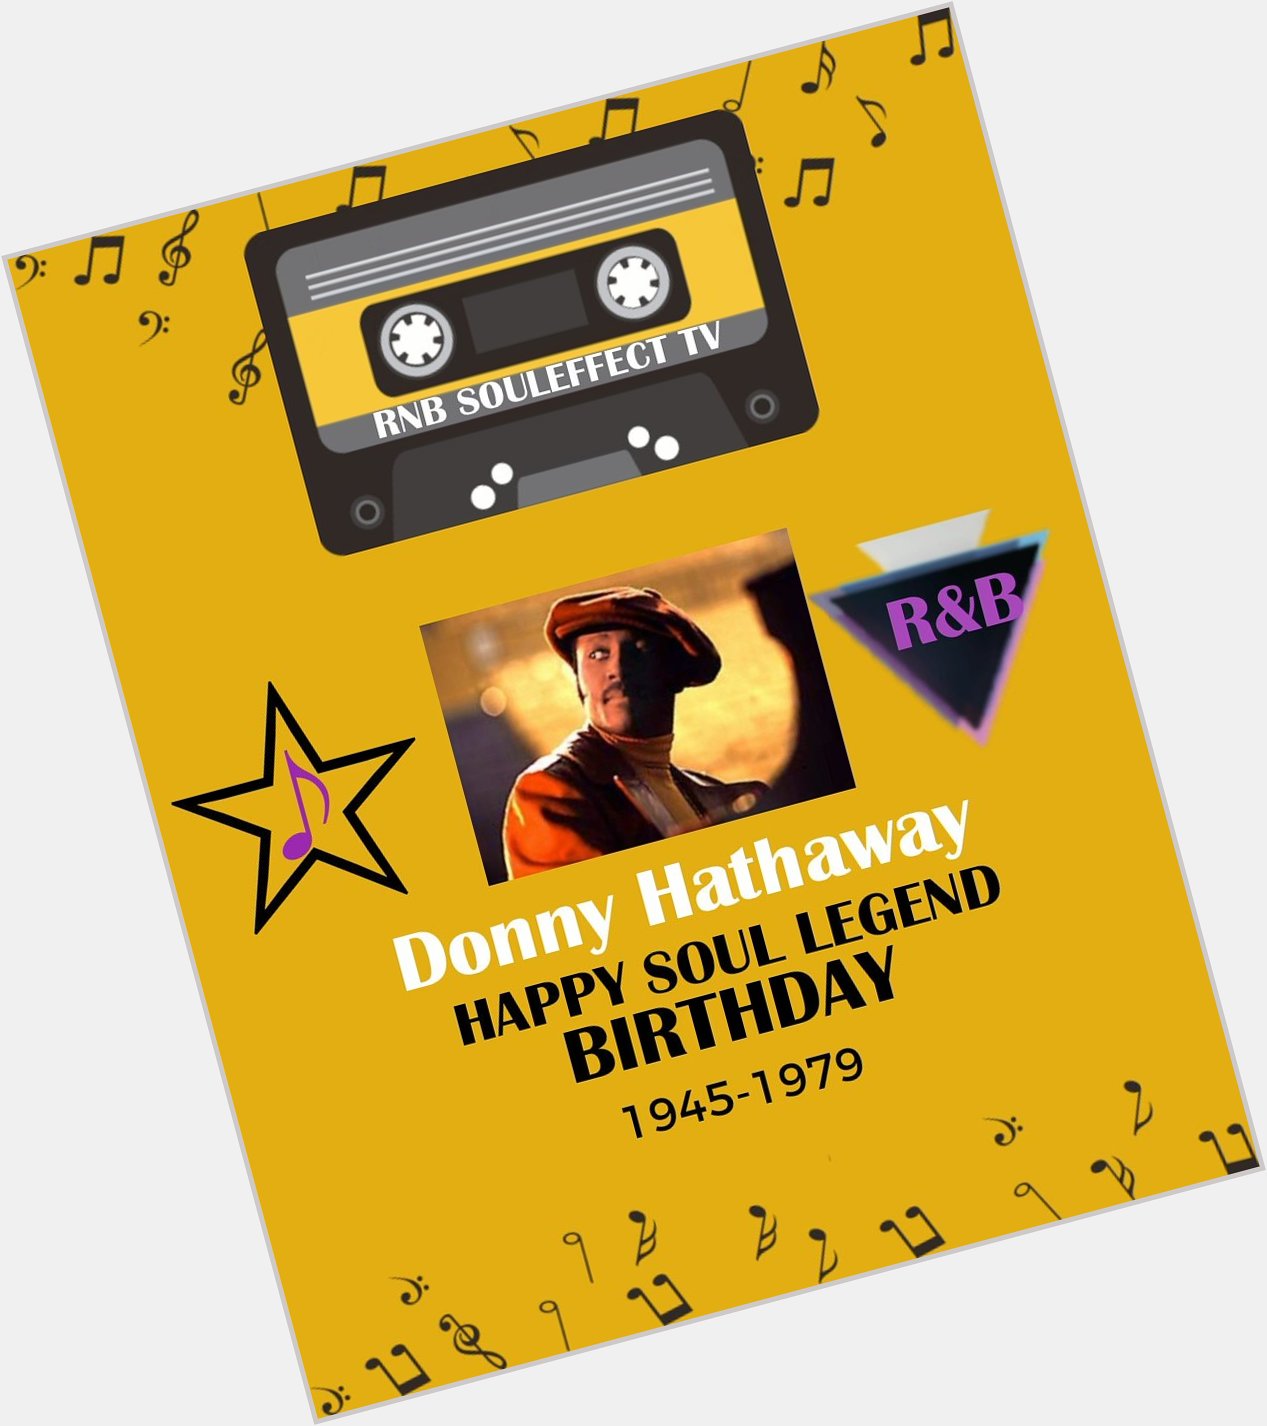 Happy Soul Legend Birthday Donny Hathaway        